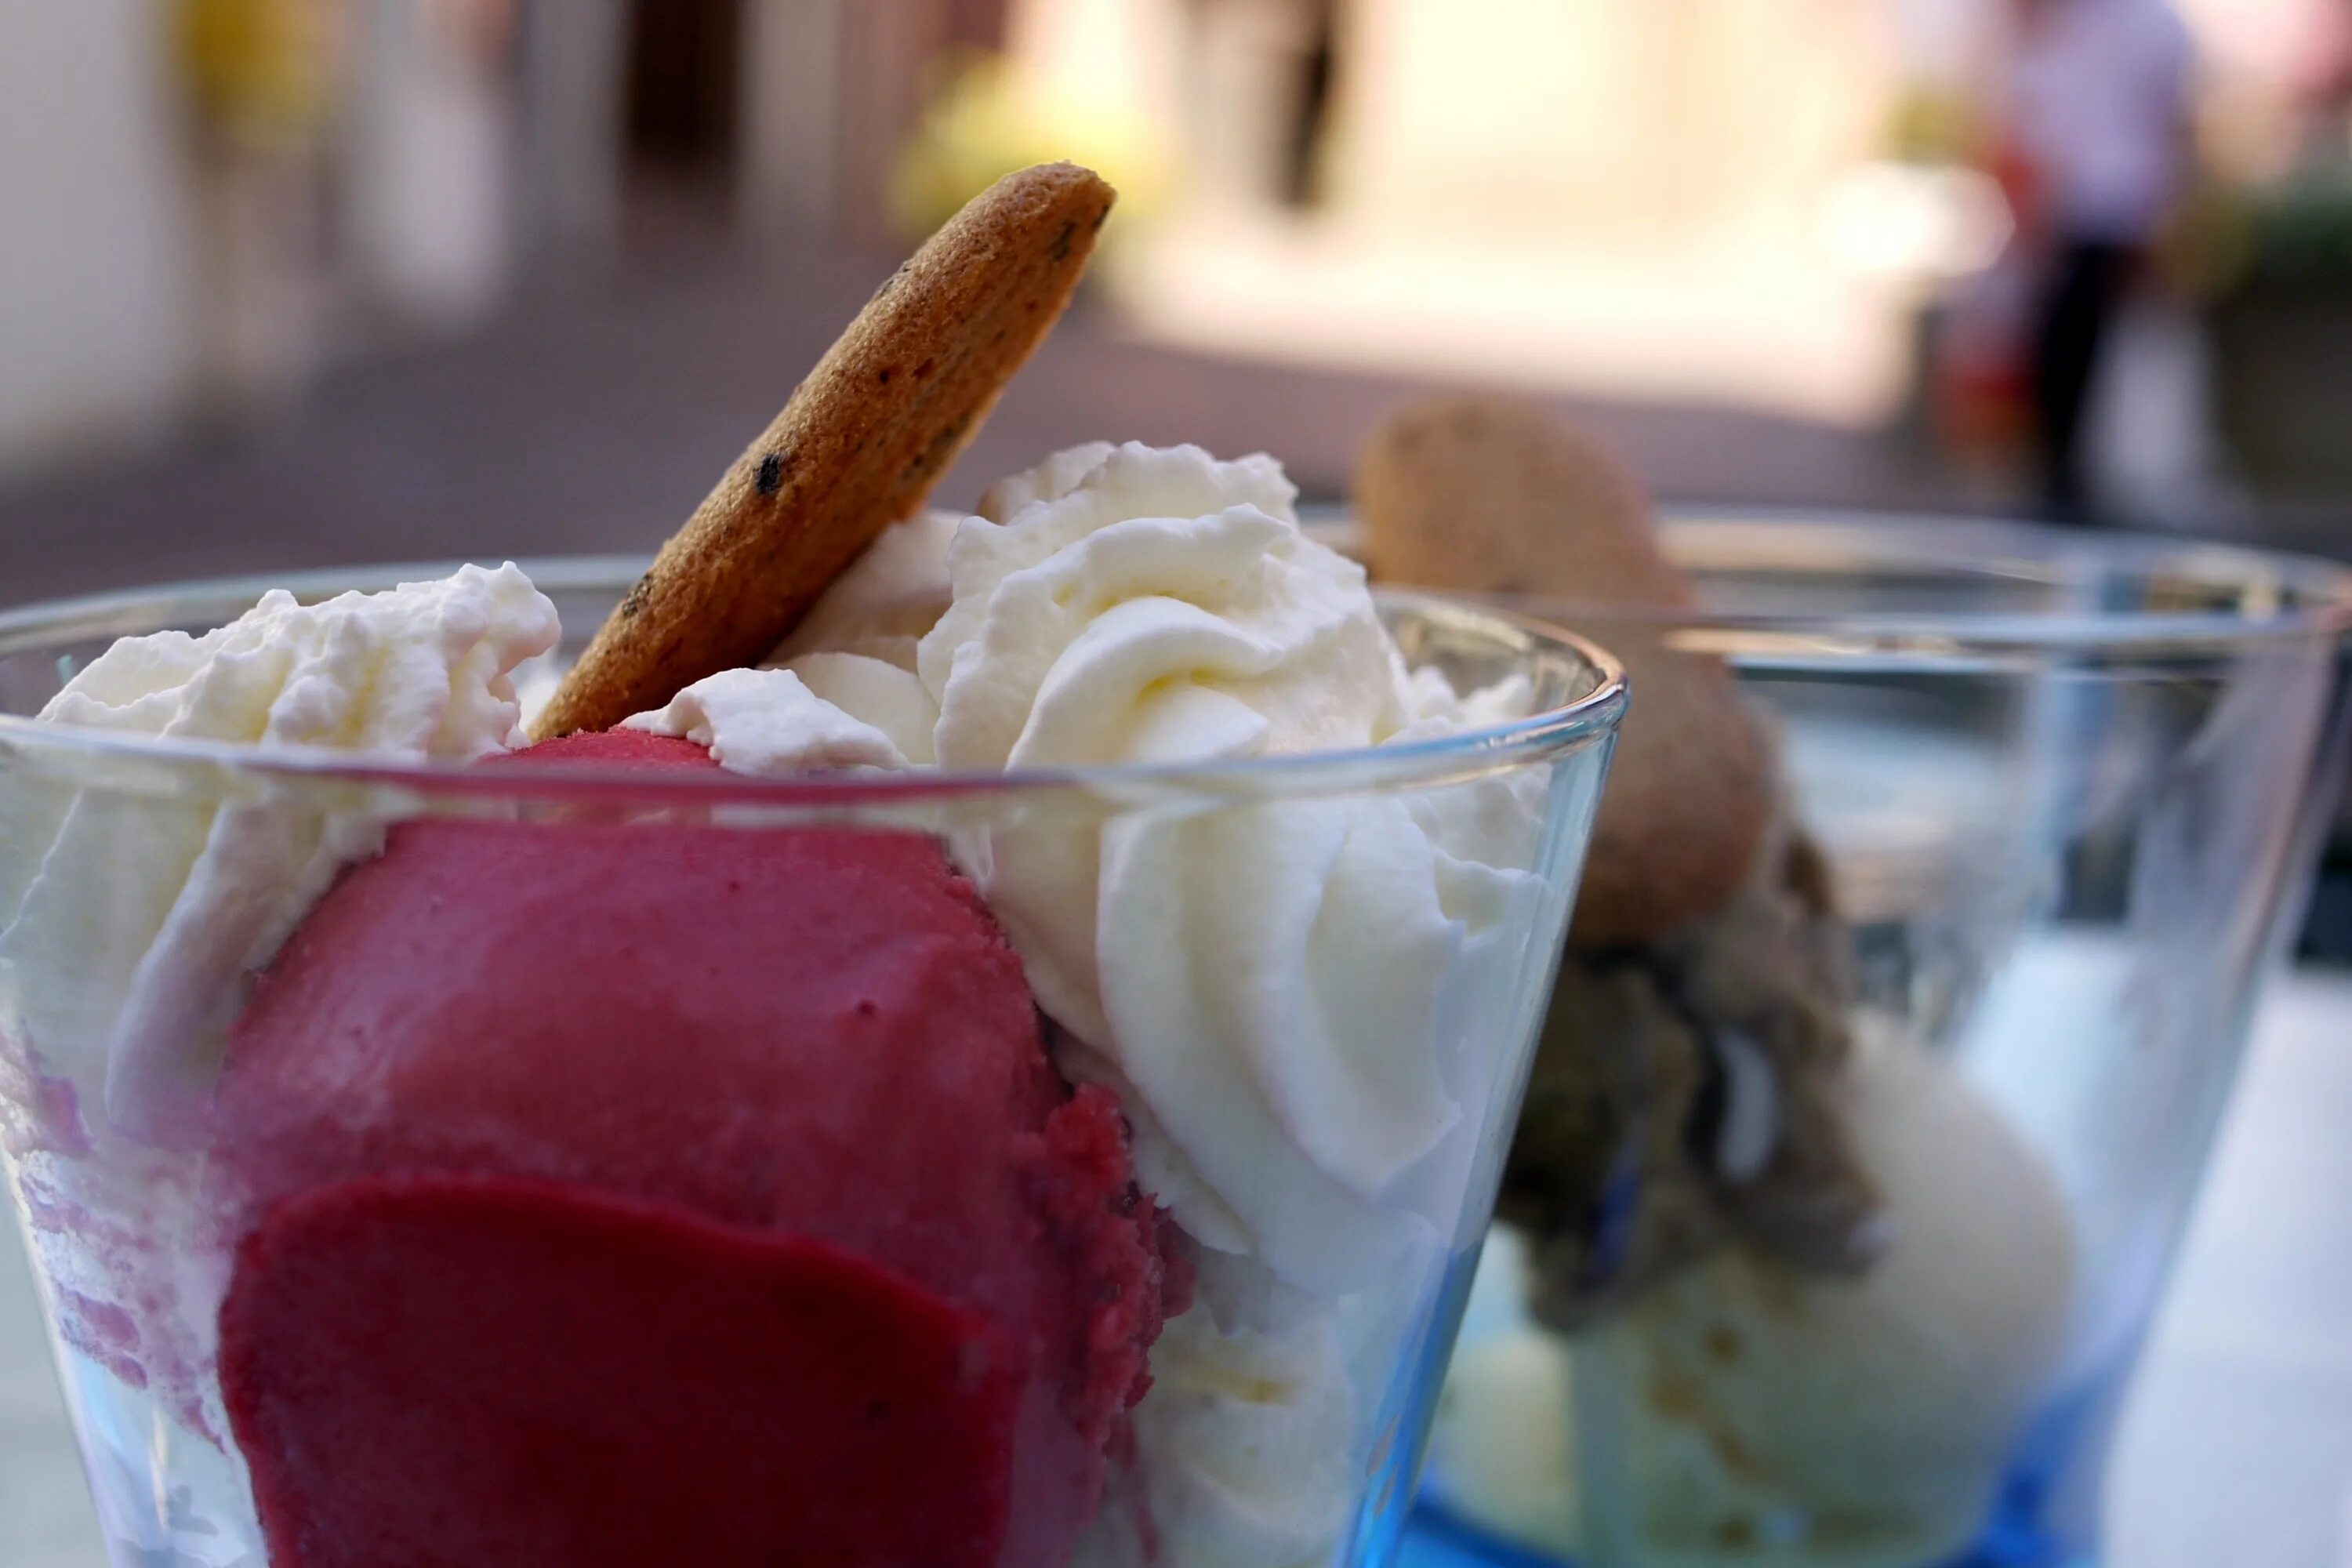 Айс Крим мороженщик. Красивое мороженое. Домашнее мороженое. Мороженое фото.